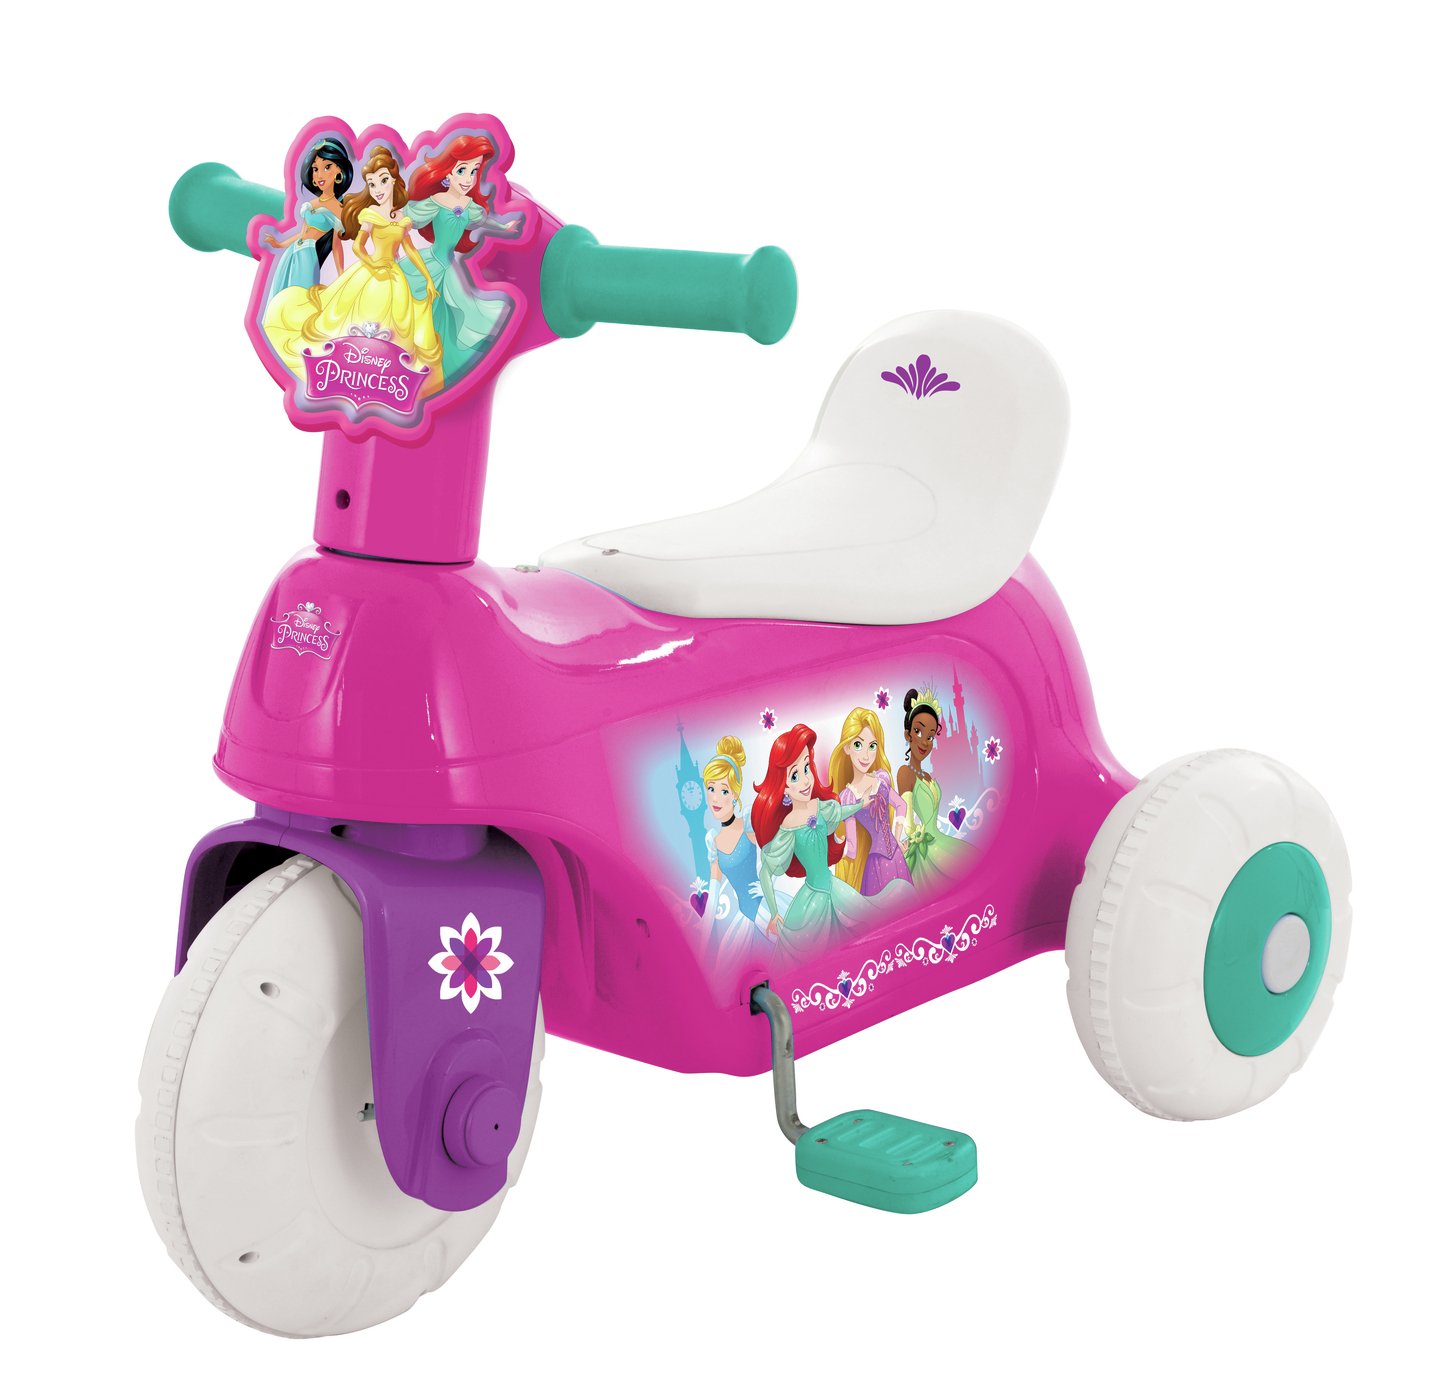 Disney Princess 6V Ride On & Vehicle Review